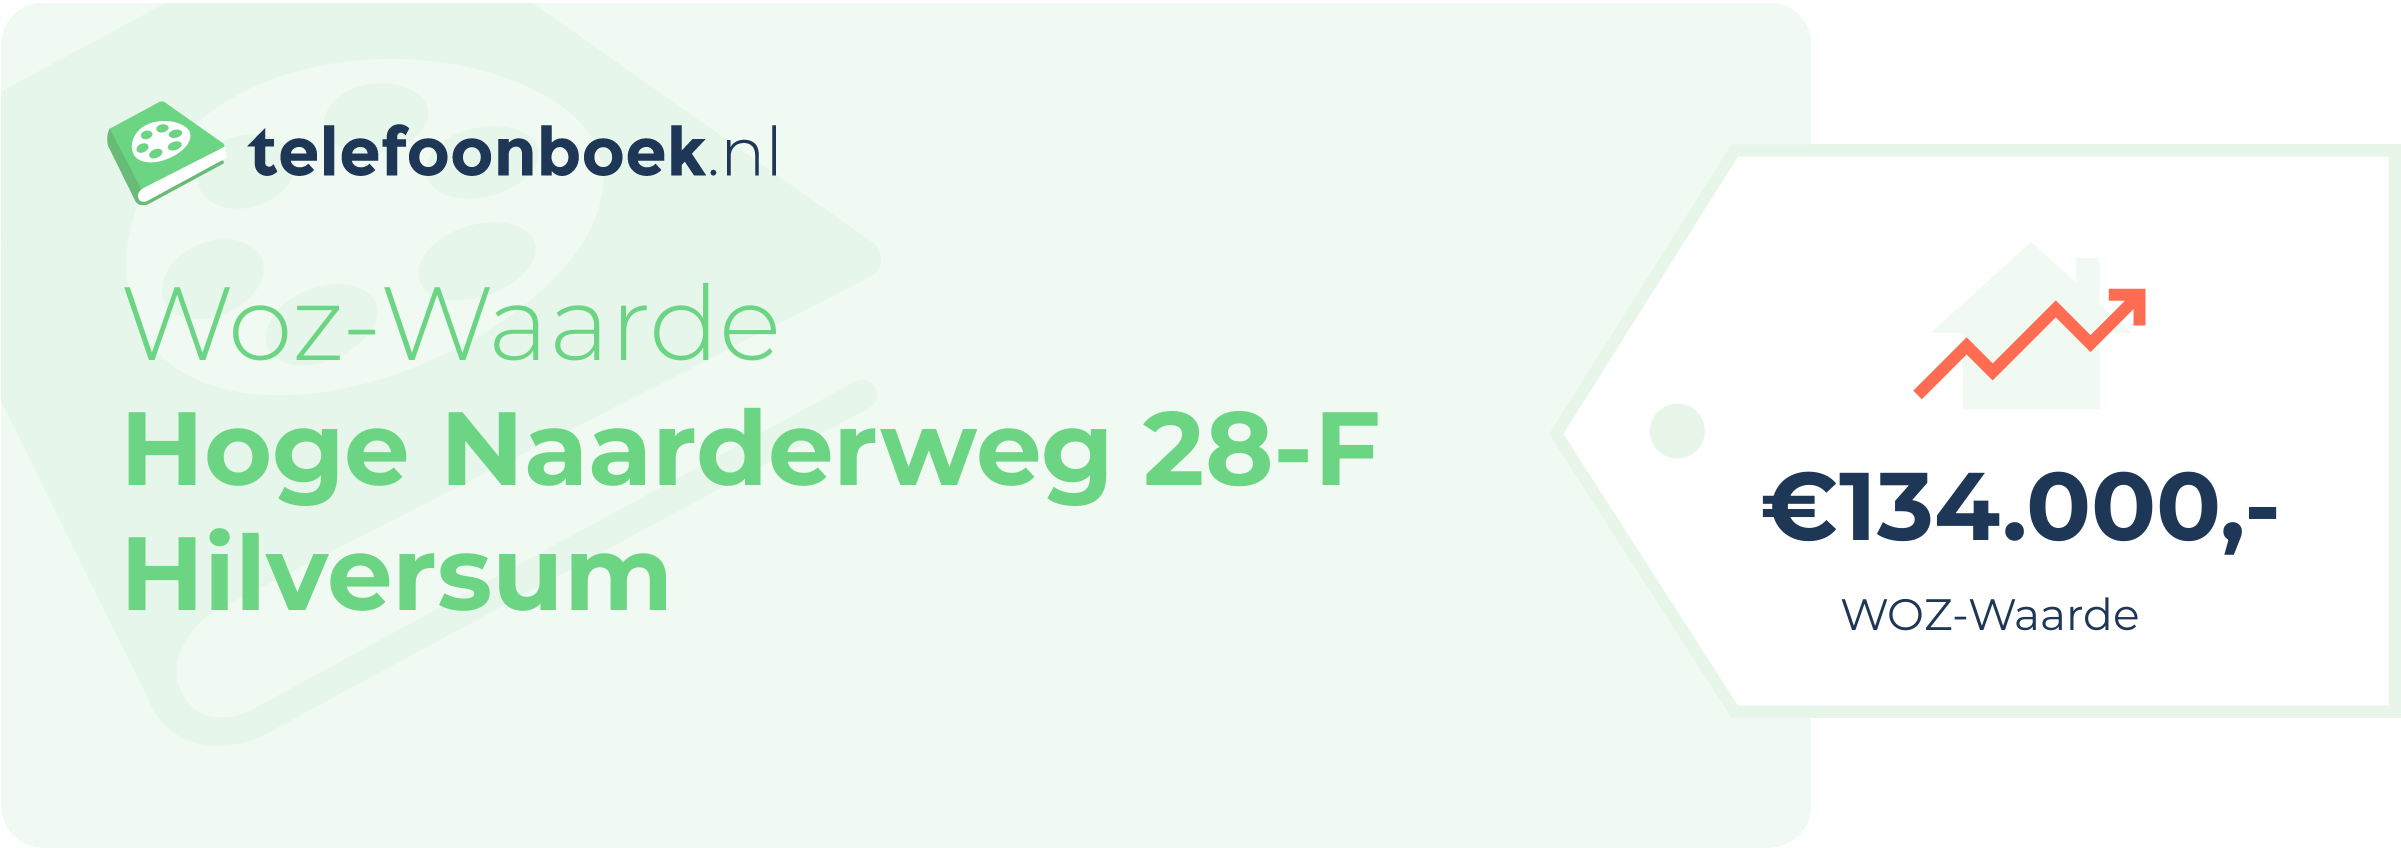 WOZ-waarde Hoge Naarderweg 28-F Hilversum